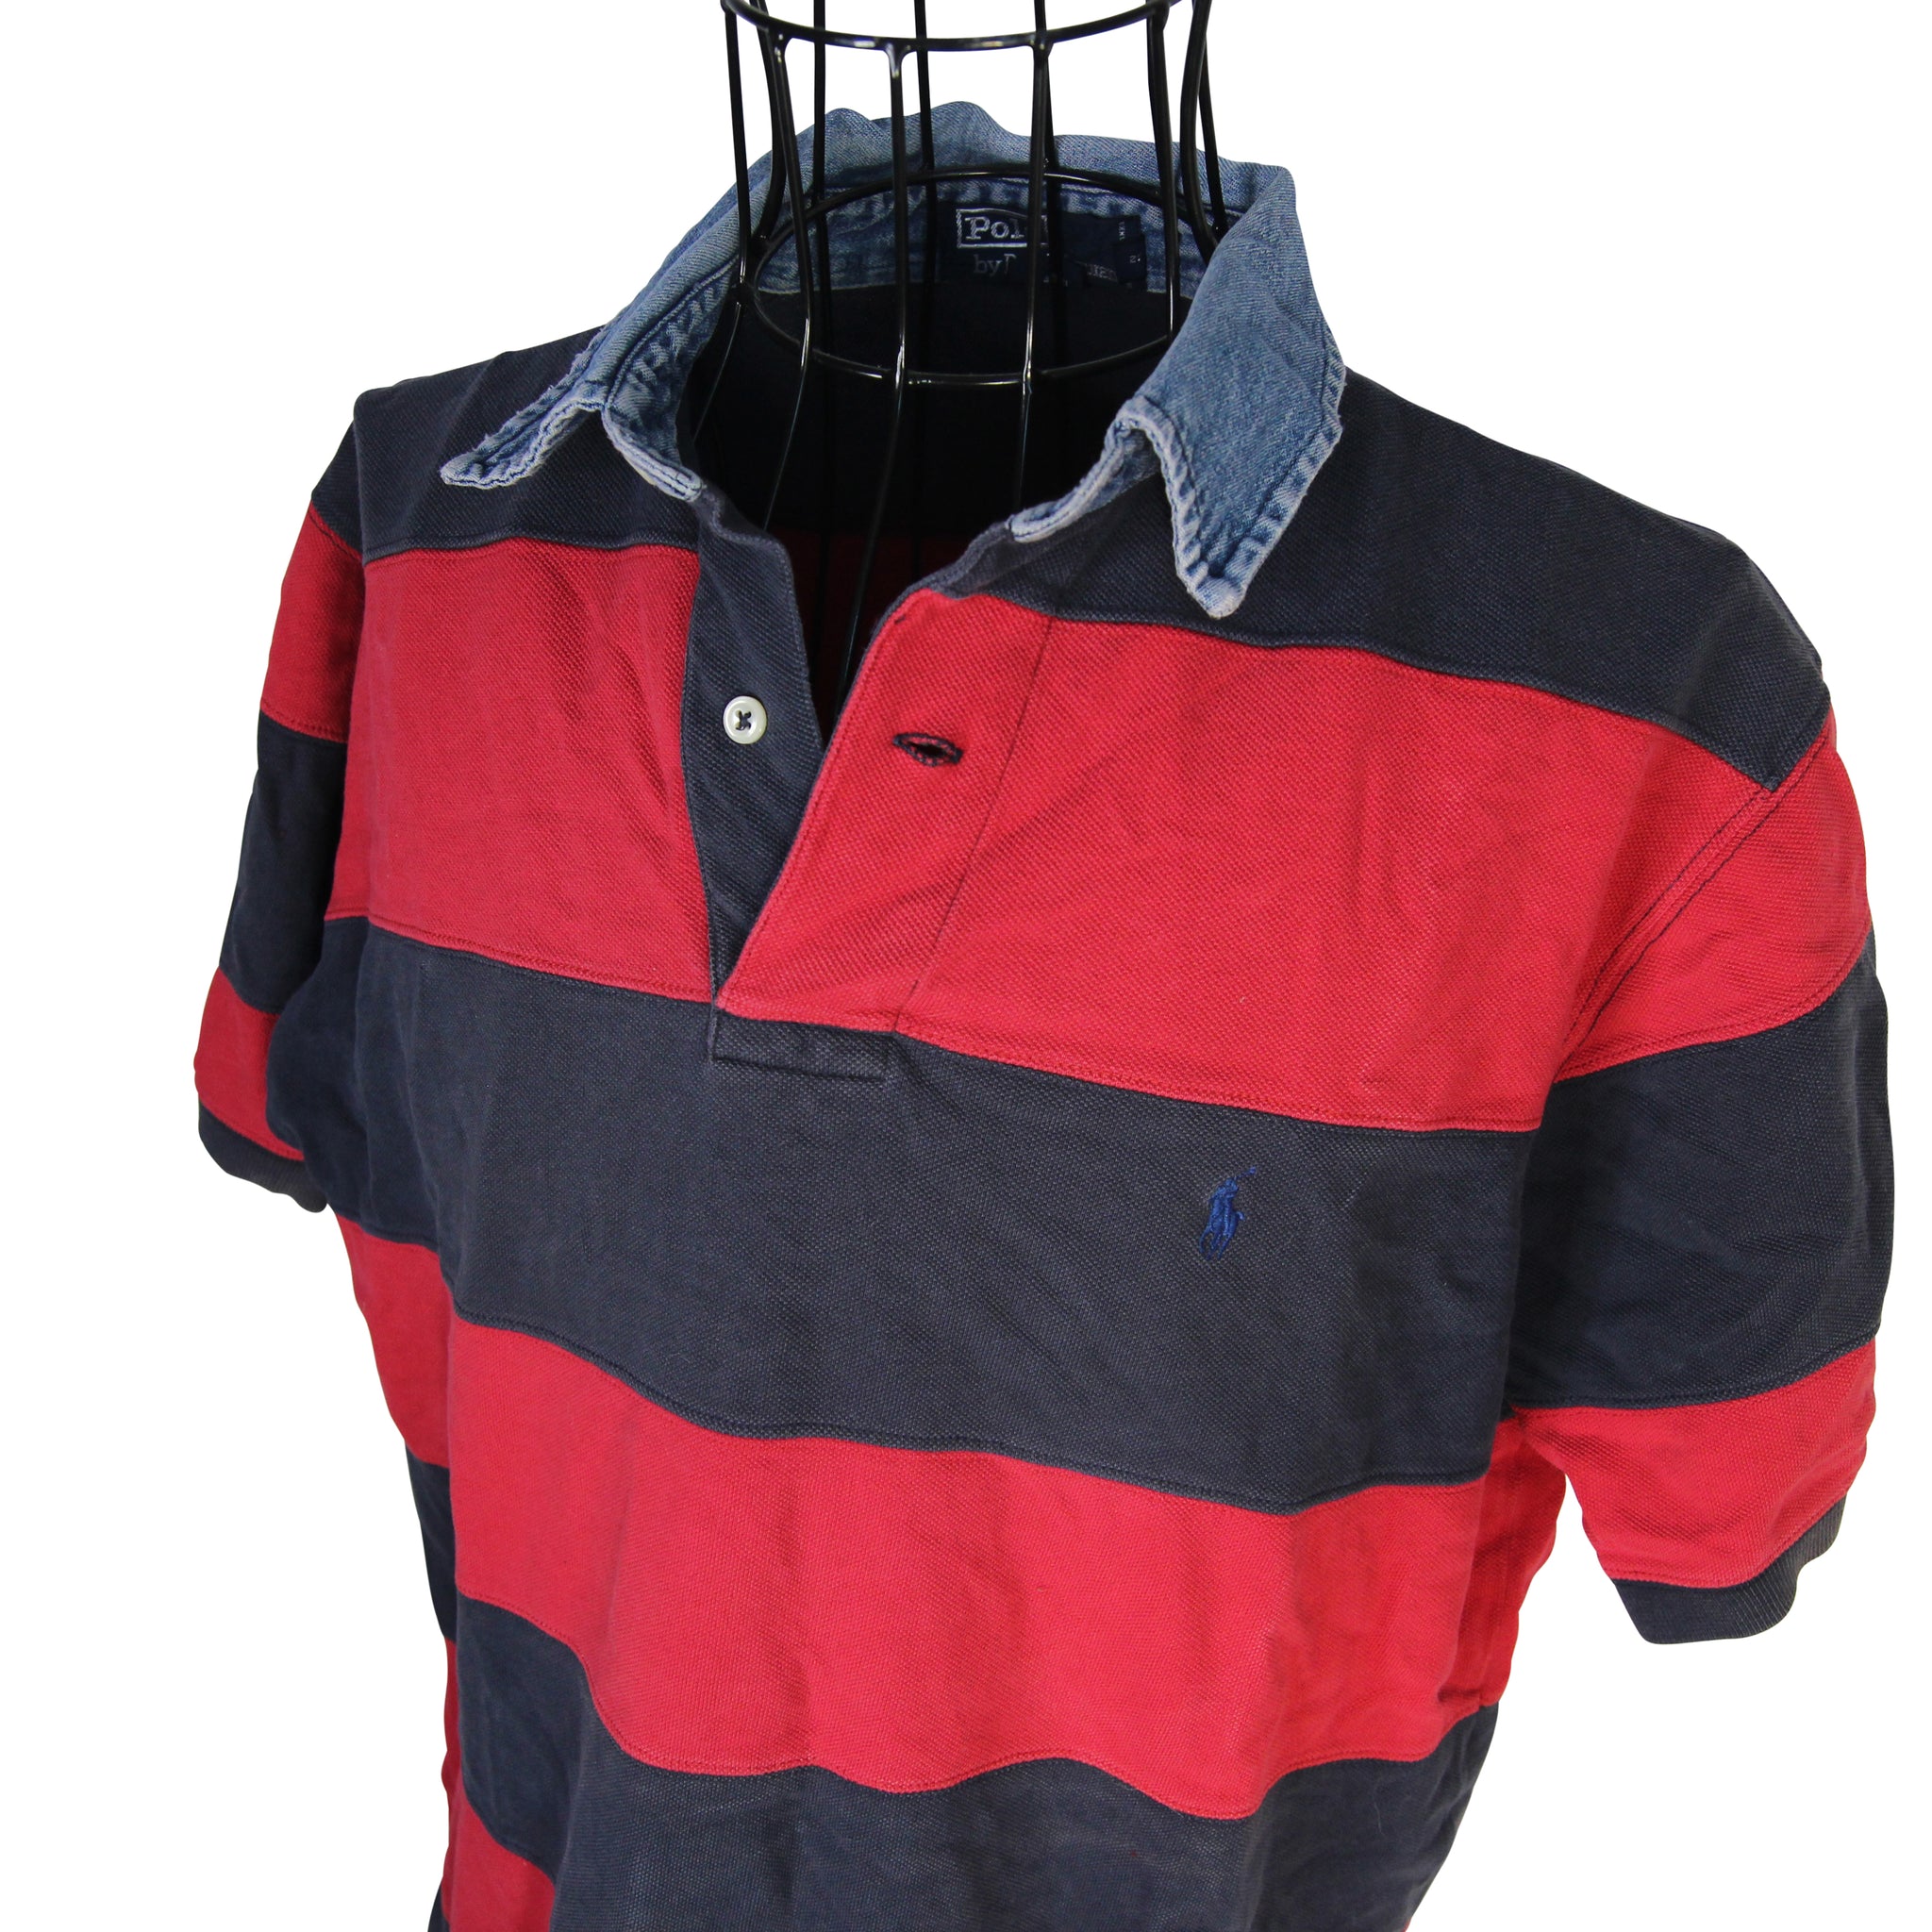 Ralph Lauren Vintage Polo Shirt